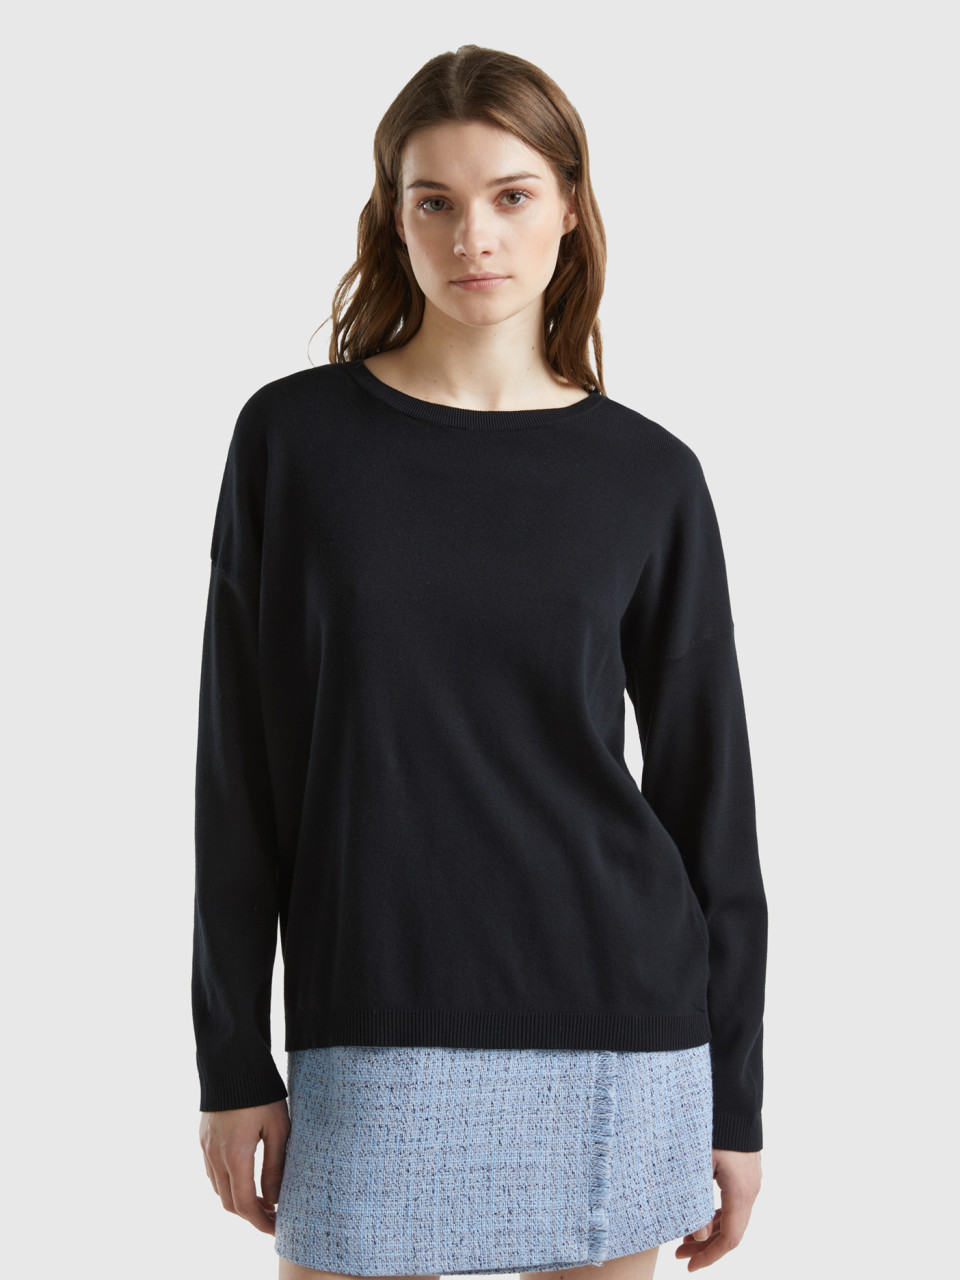 Benetton, Cotton Sweater With Round Neck, Black, Women